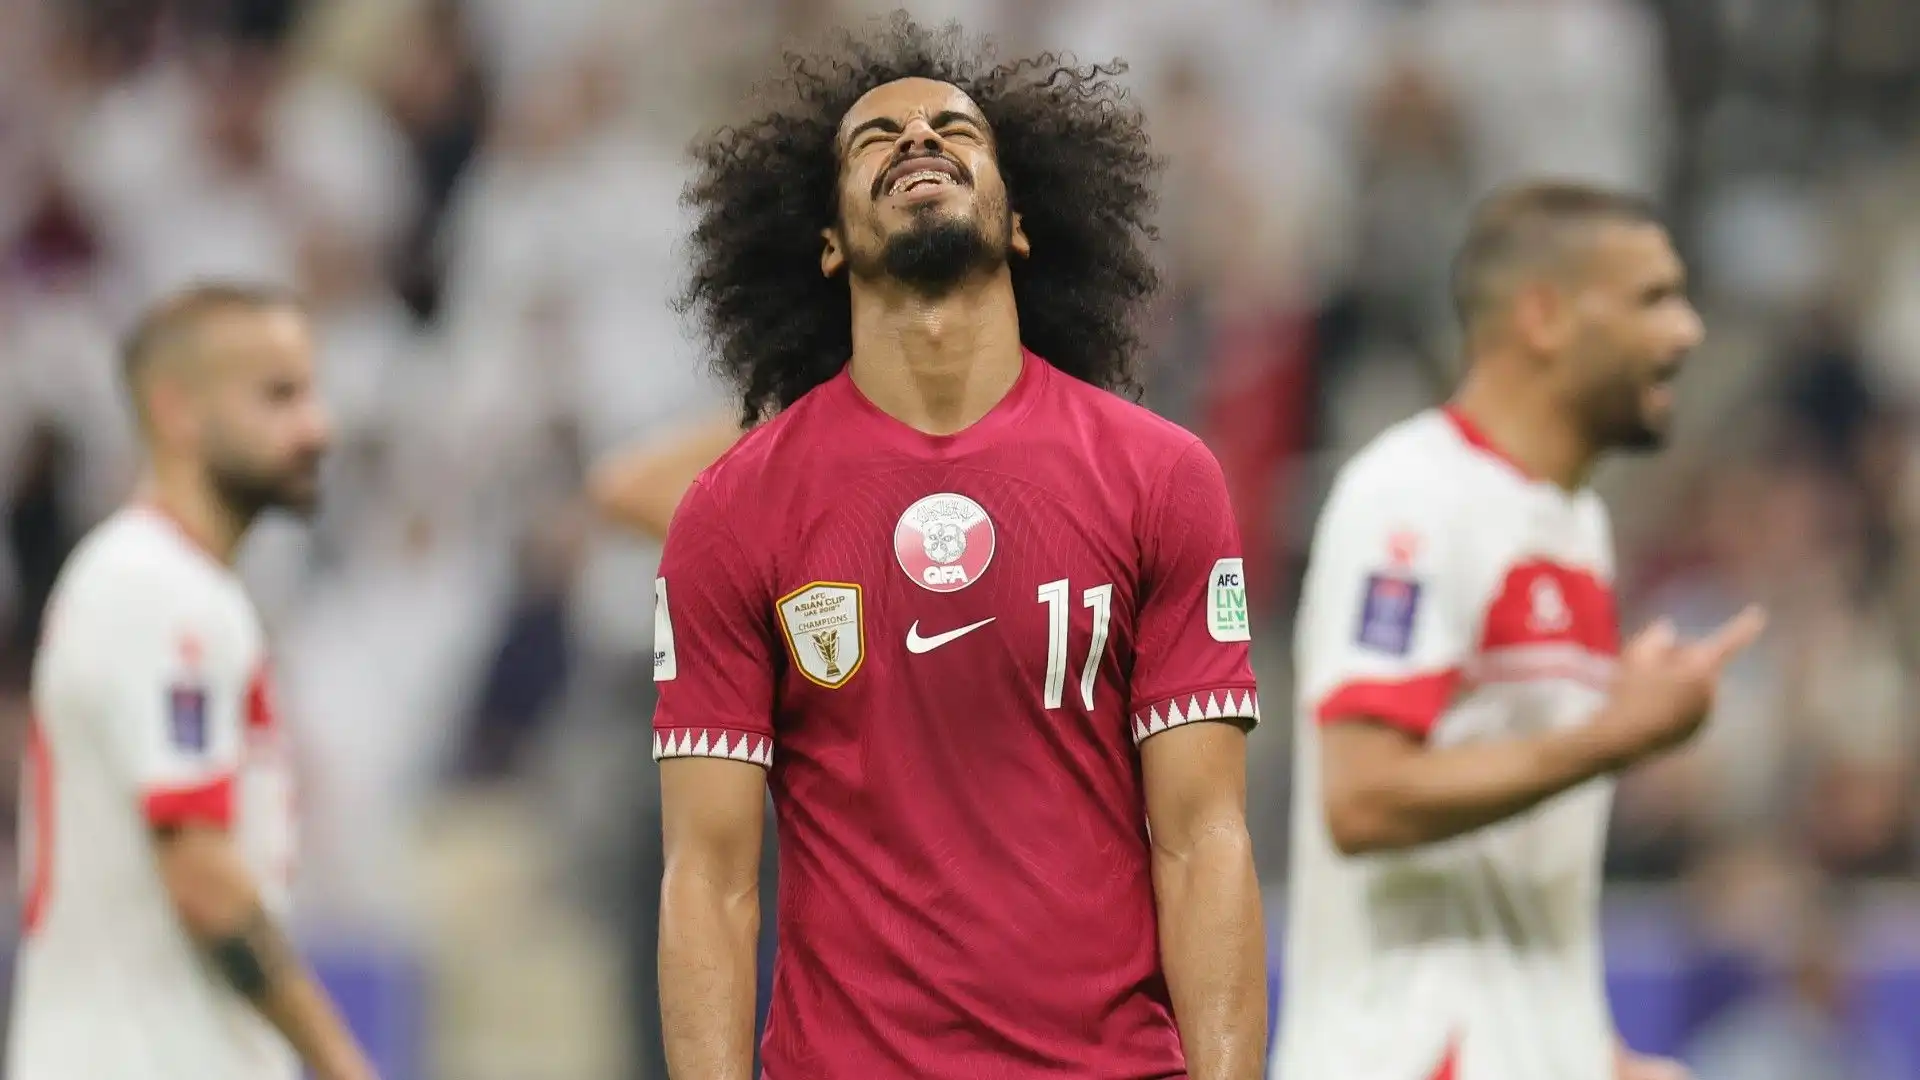 L'attaccante è tra i migliori calciatori qatarioti